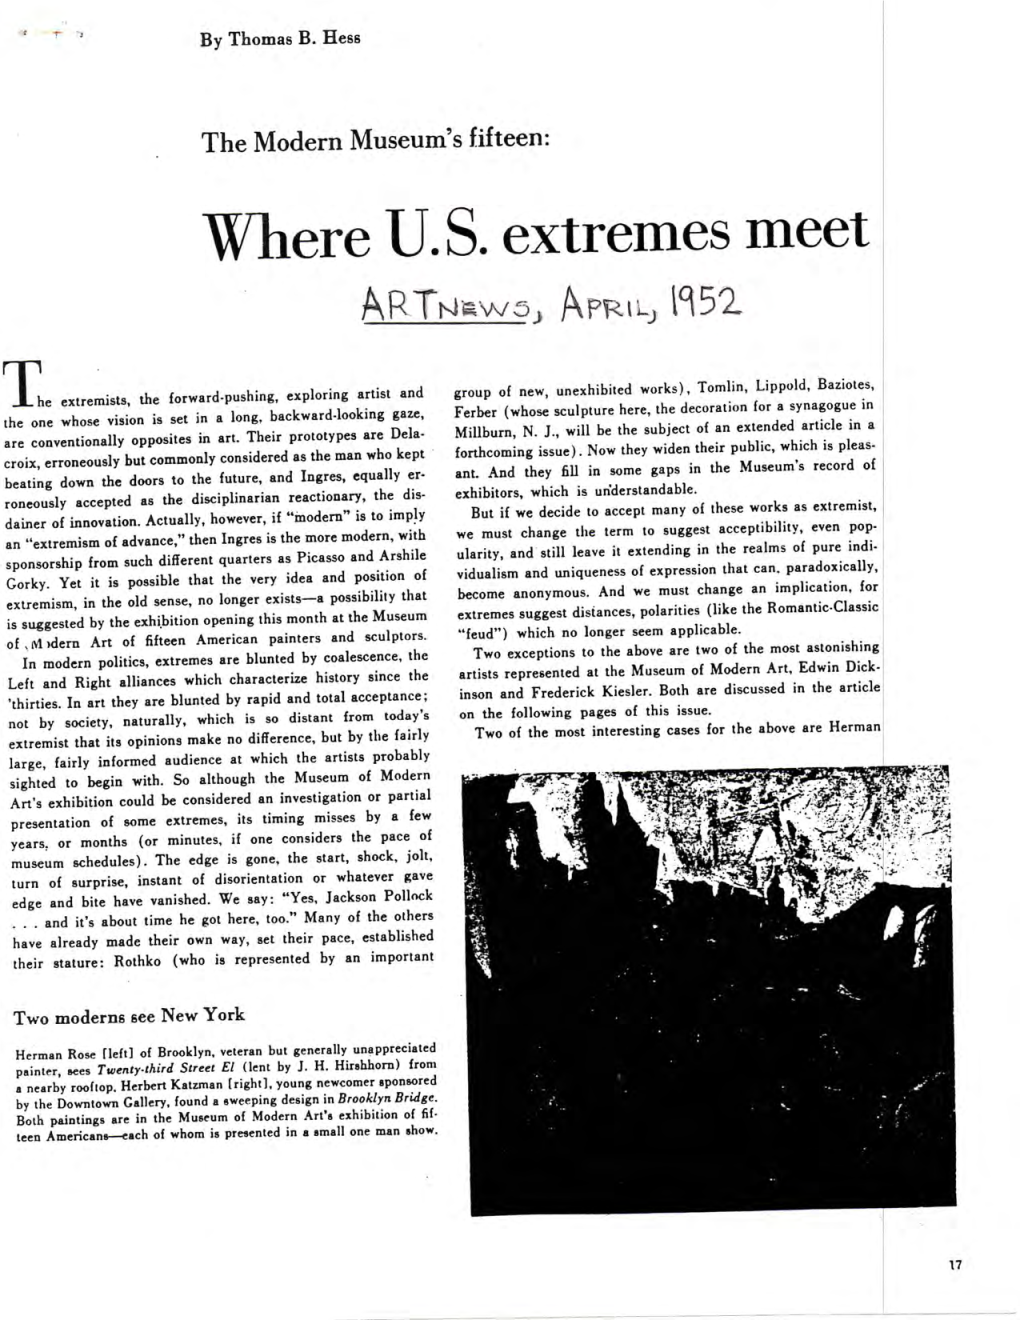 Where U. S. Extremes Meet